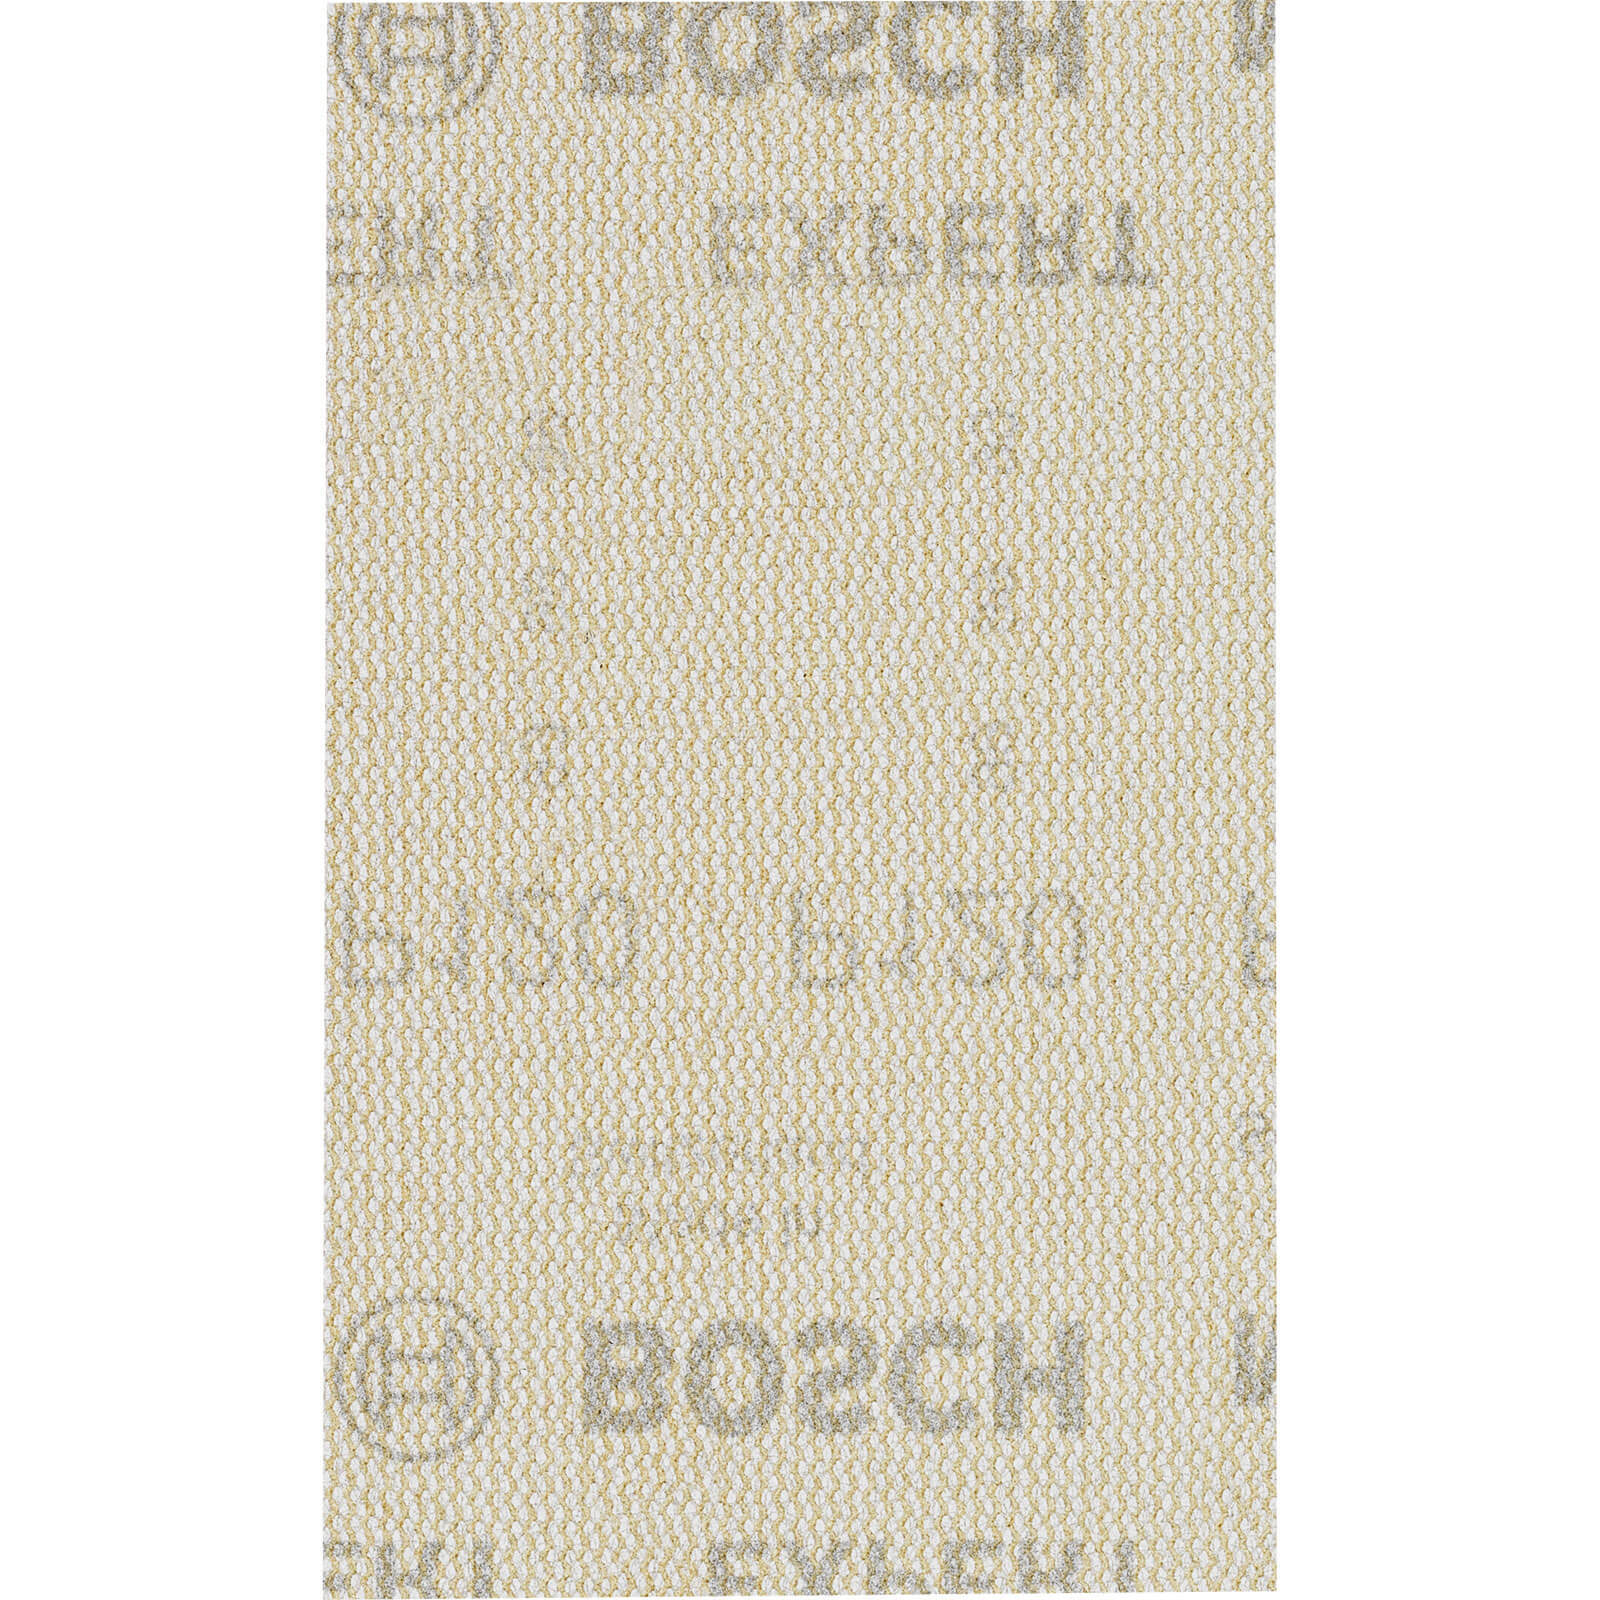 Image of Bosch Expert M480 80mm x 133mm Net Abrasive Sanding Sheets 80mm x 133mm 120g Pack of 10